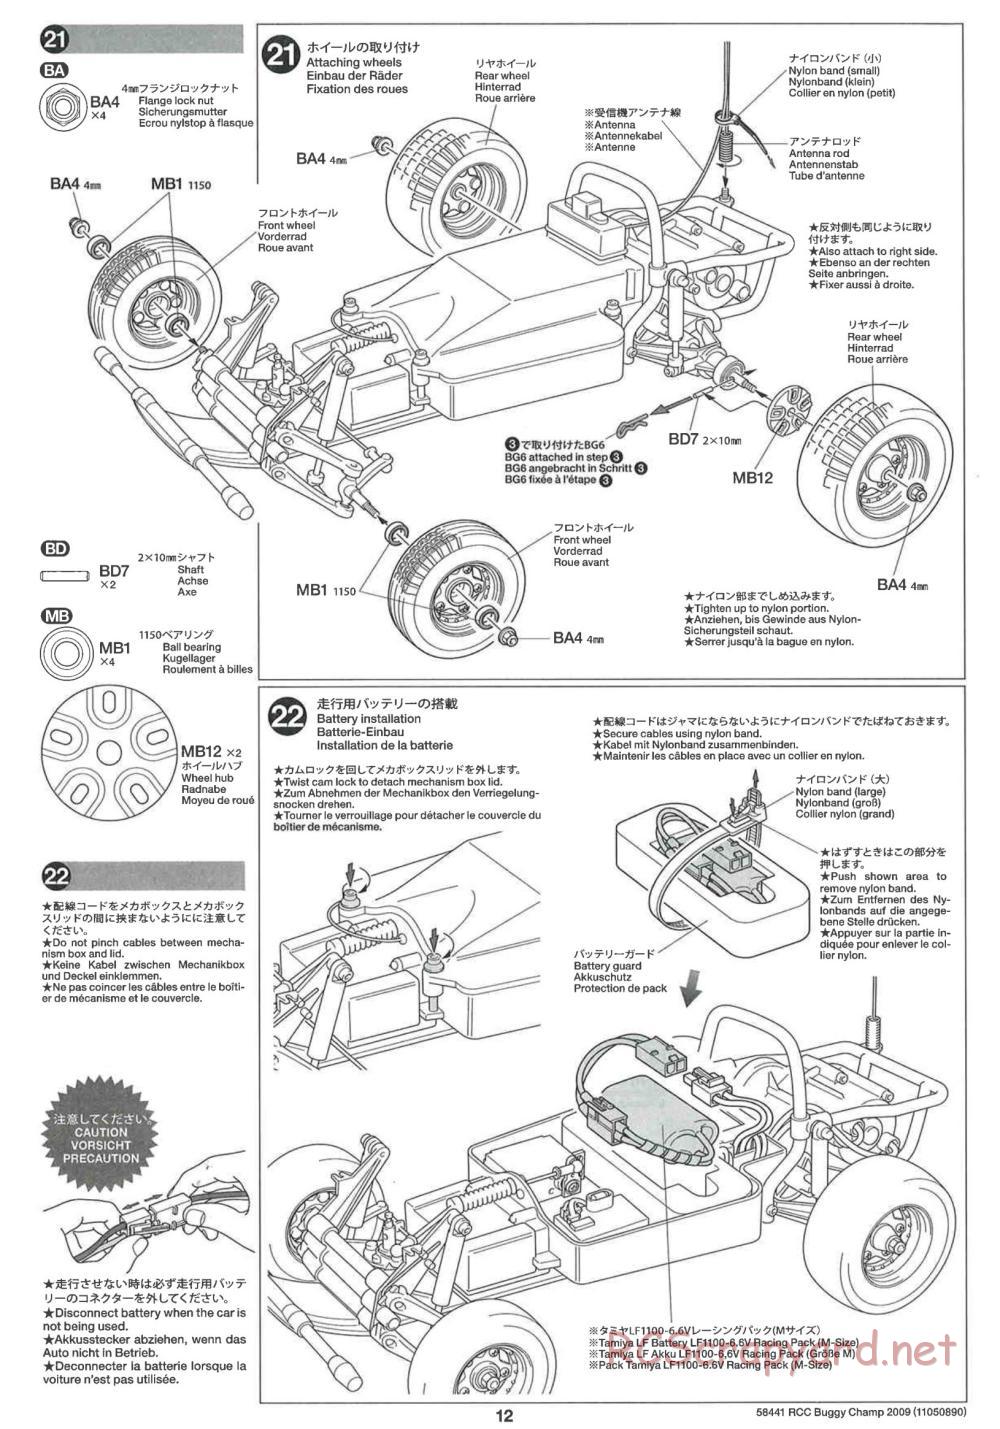 Tamiya - Buggy Champ Chassis - Manual - Page 12